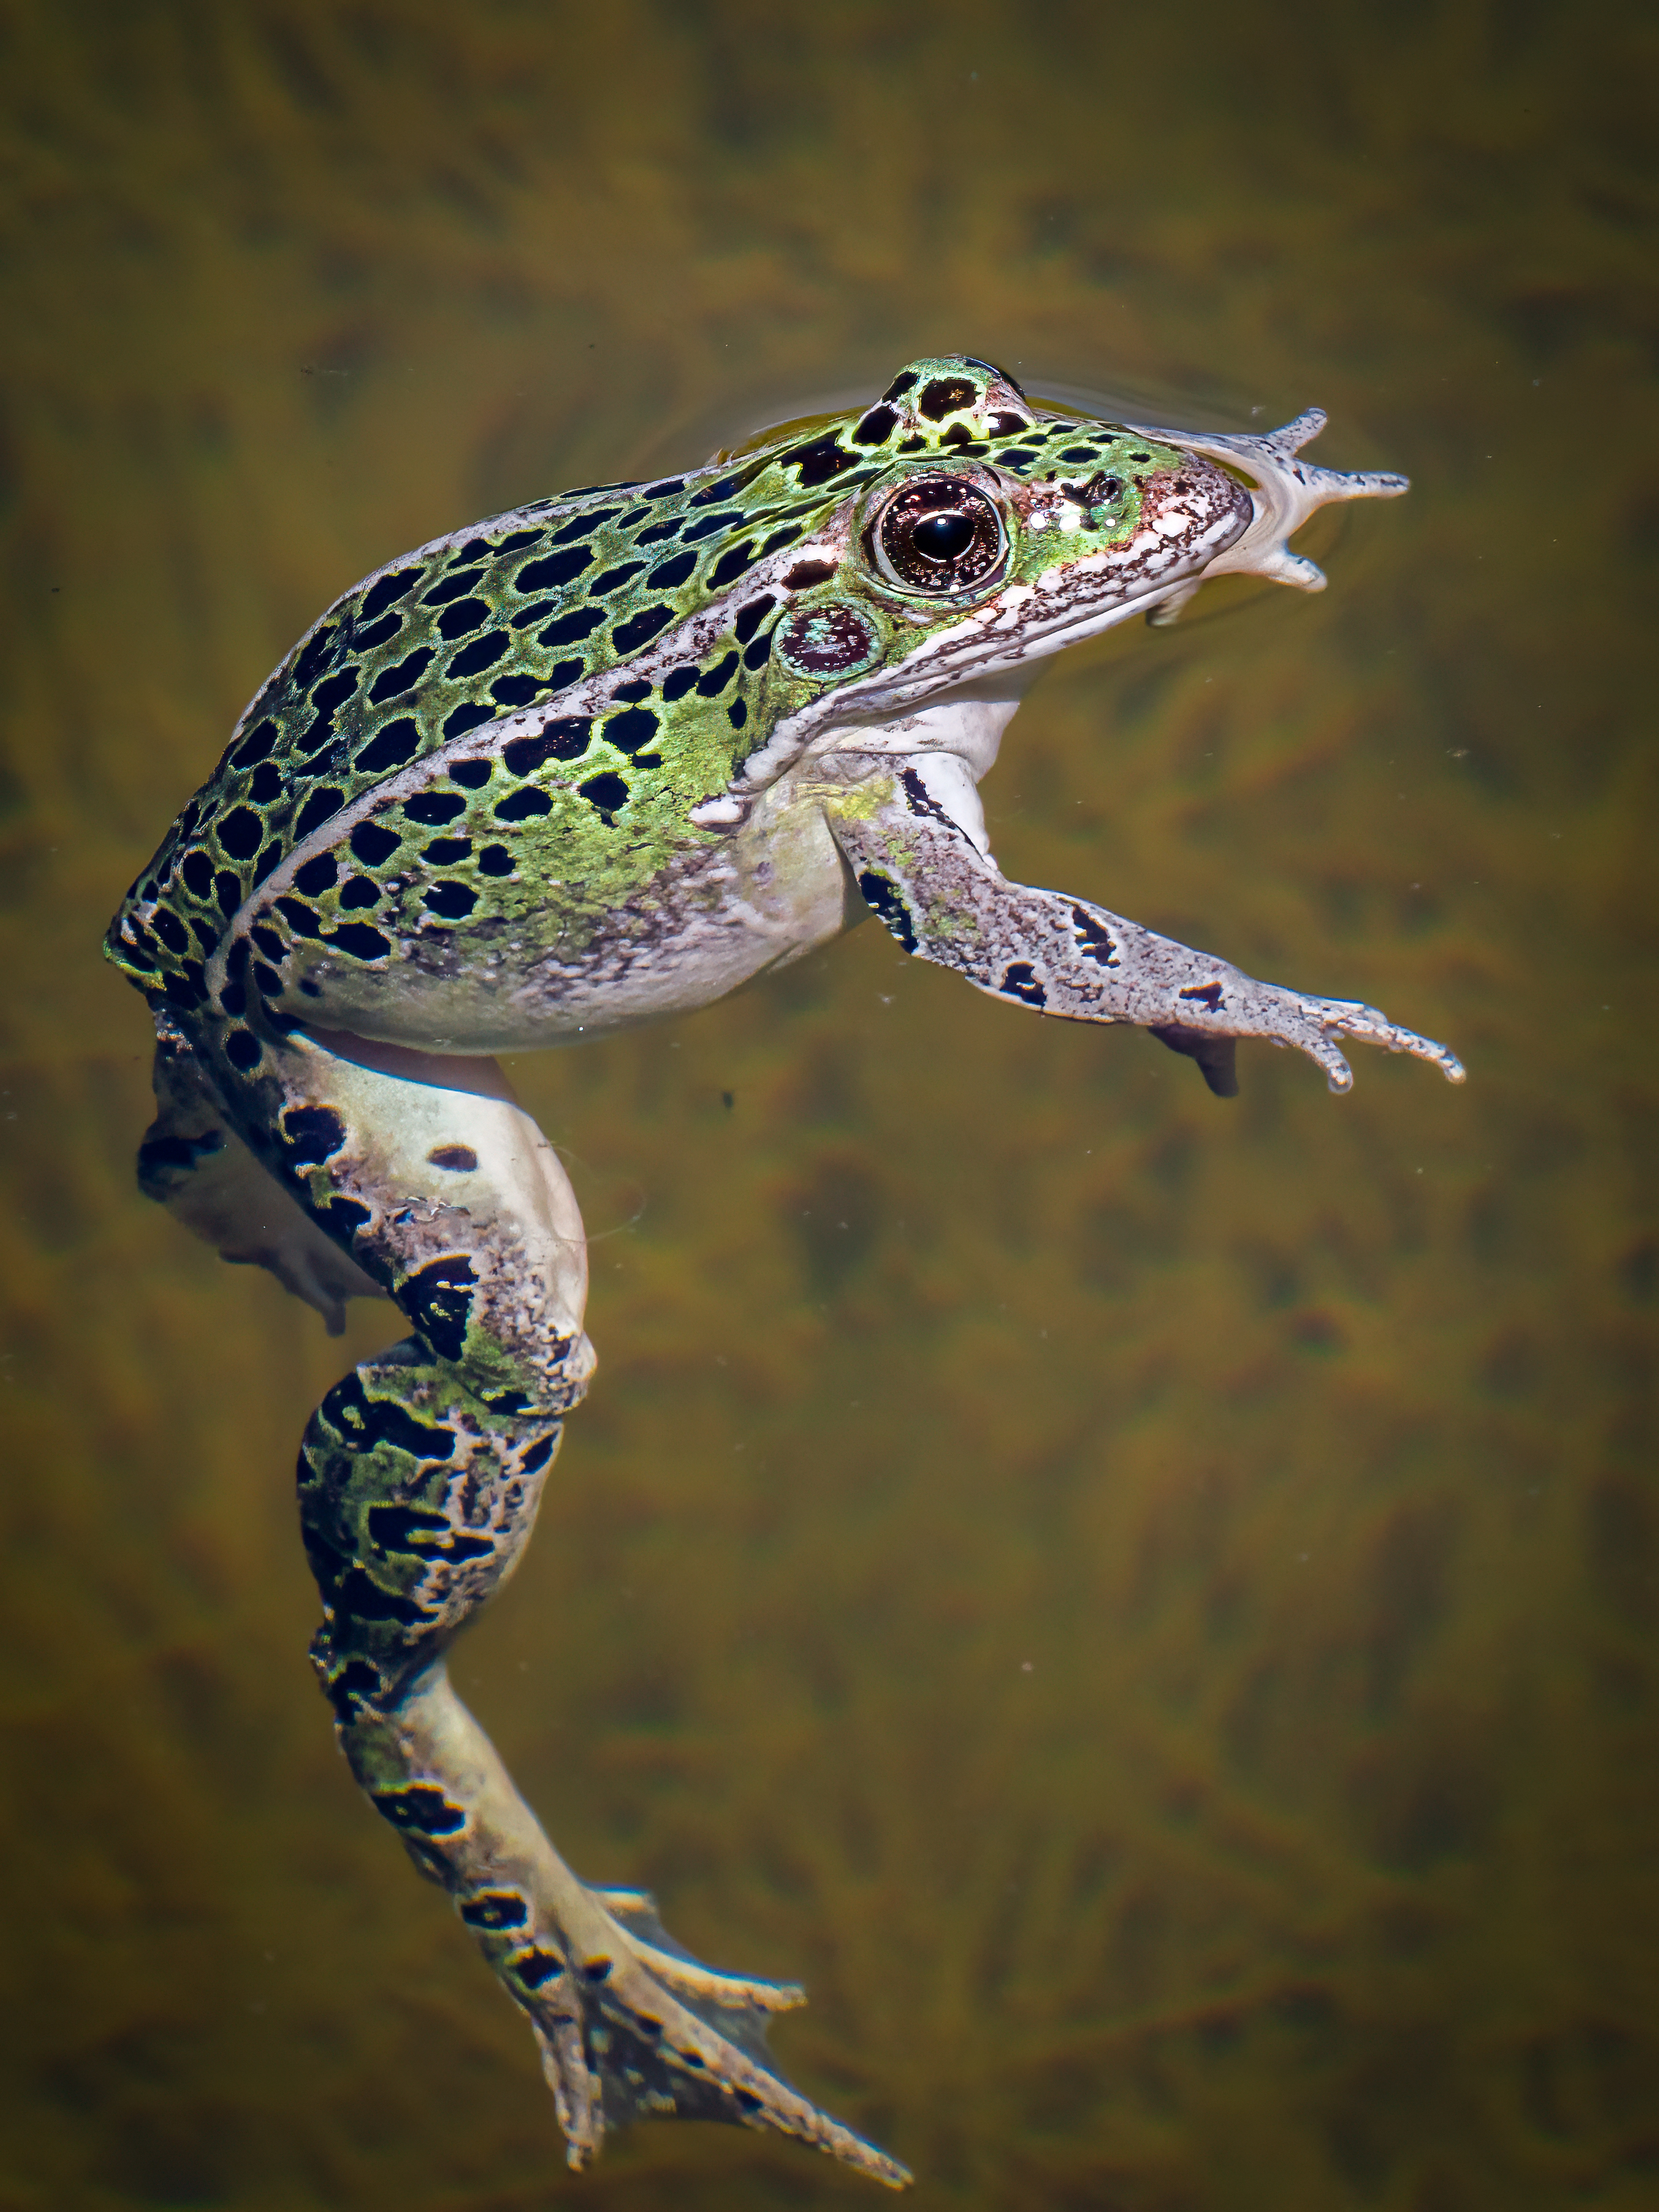 Adult Northern Leopard Frog floating in pond.